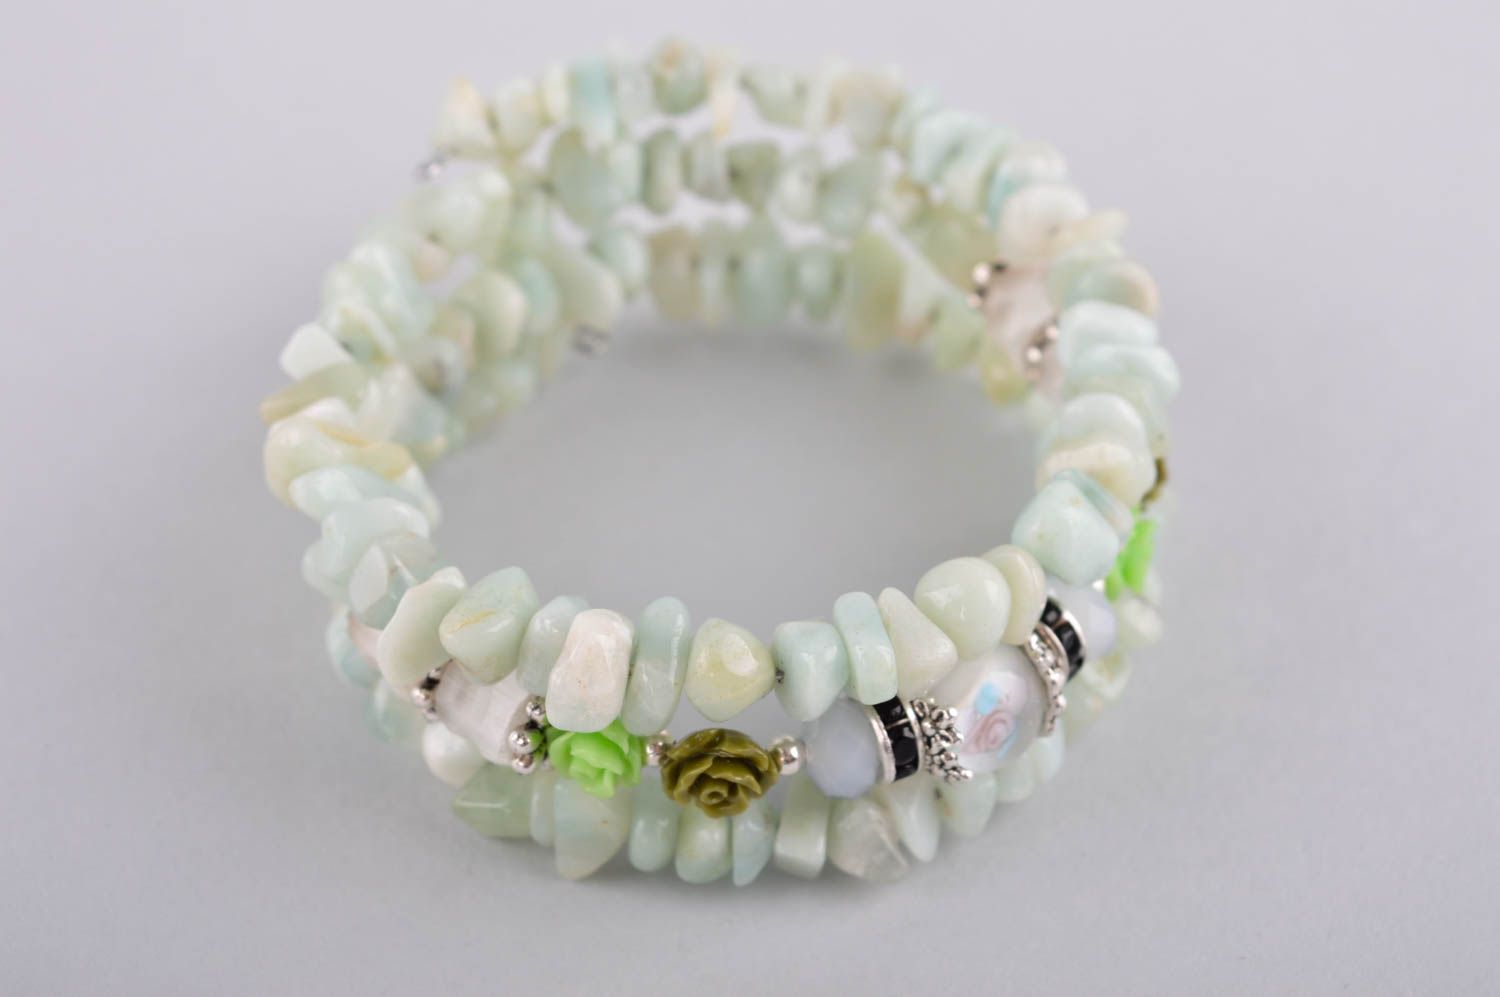 Handmade bracelet with natural stones stylish wrist bracelet elegant jewelry photo 2